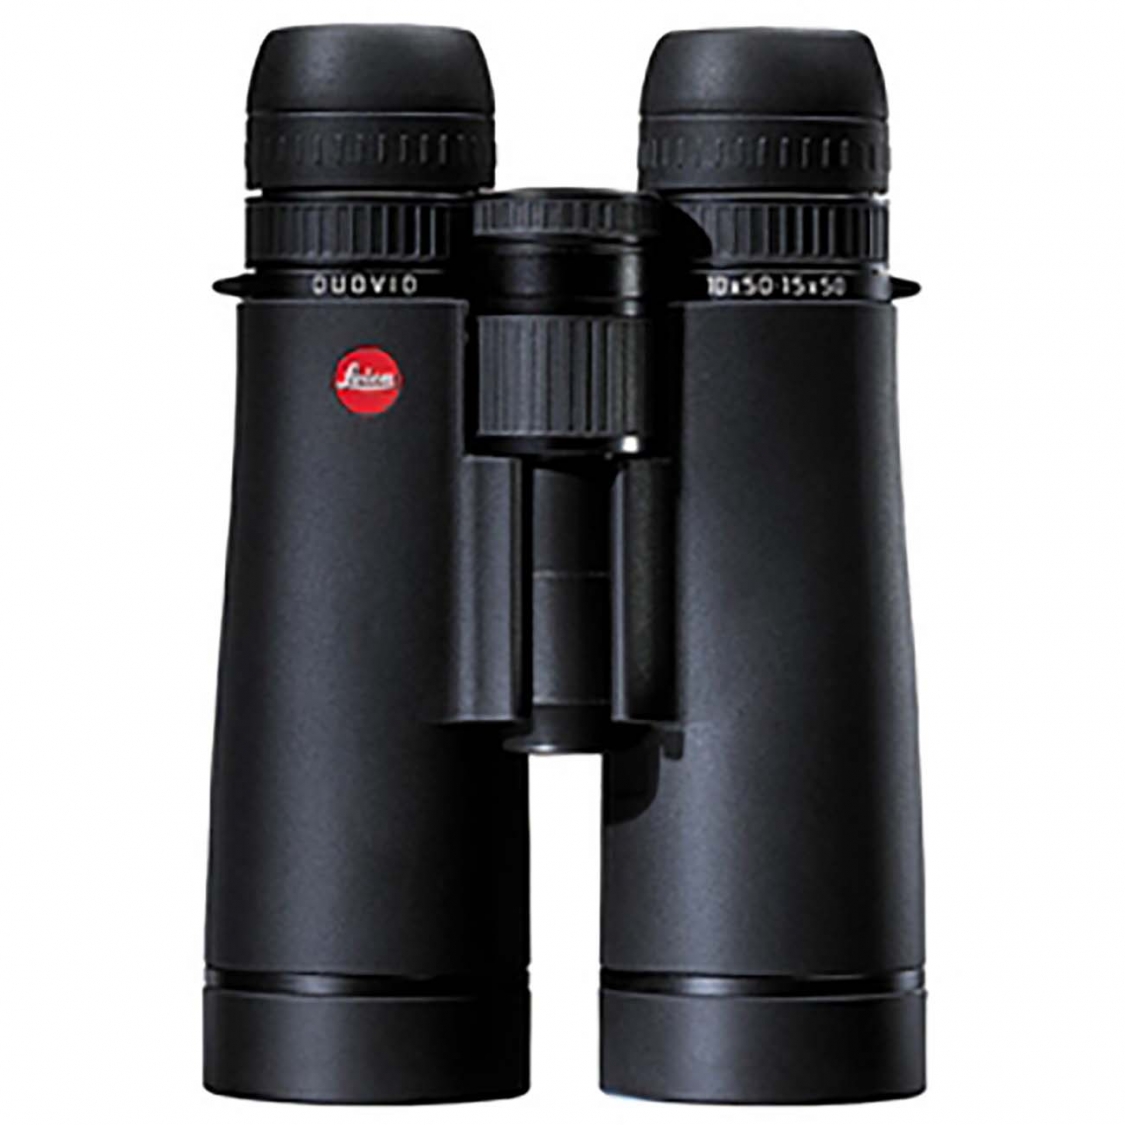 Leica Duovid 10+15x50 Binoculars (black)